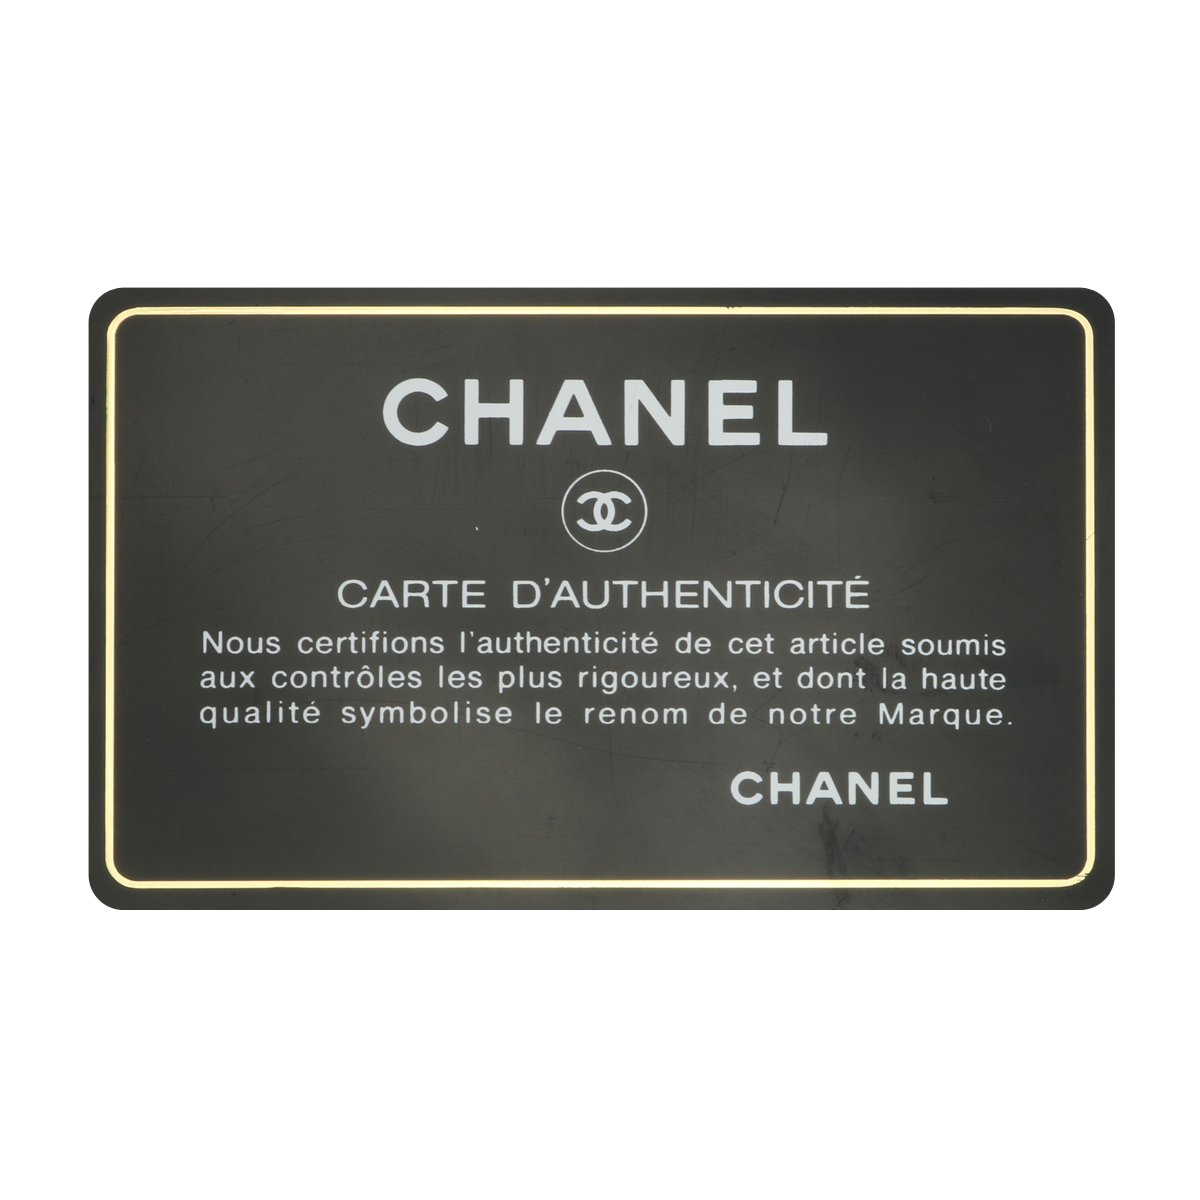 Chanel Mint Green Bag - 8 For Sale on 1stDibs